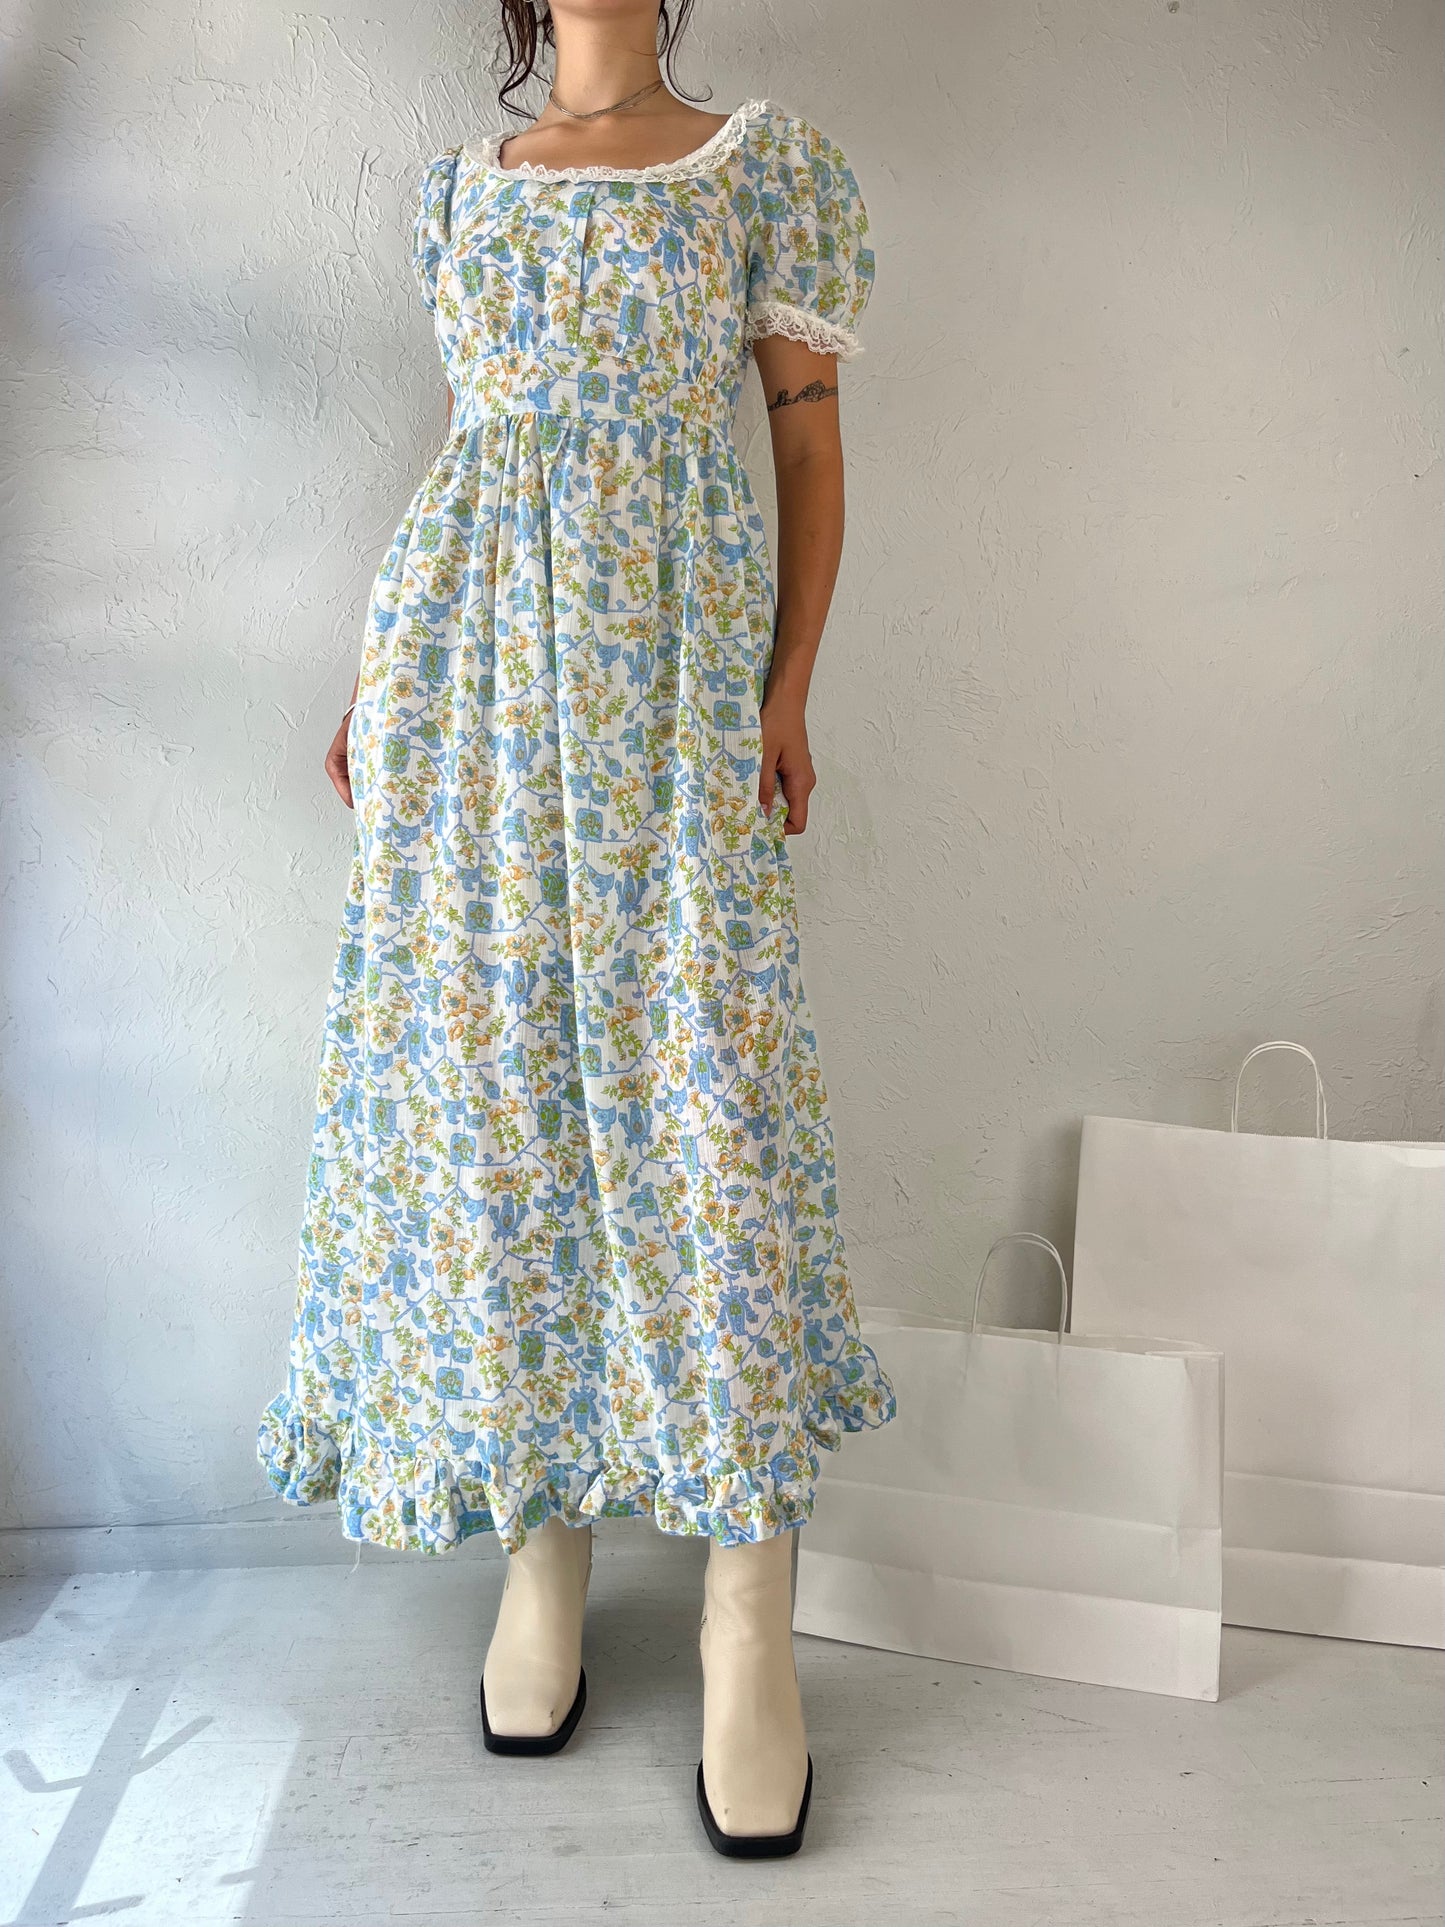 70s Handmade Blue Puff Sleeve Peasant Dress / Small - Medium